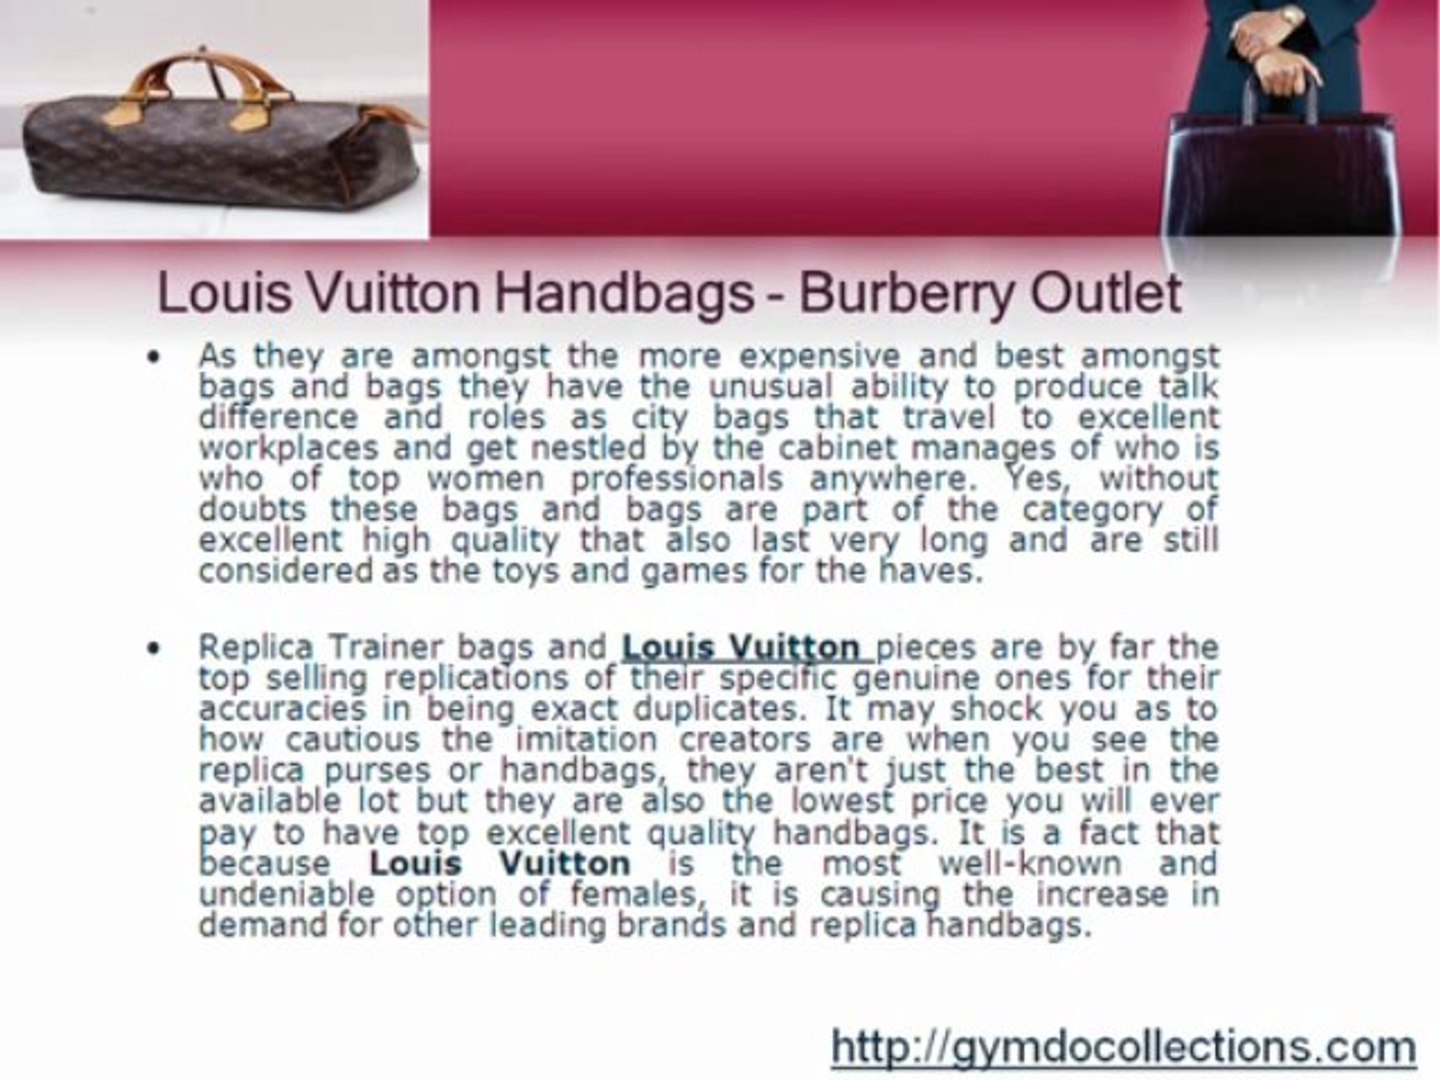 Burberry designer, Louis Vuitton